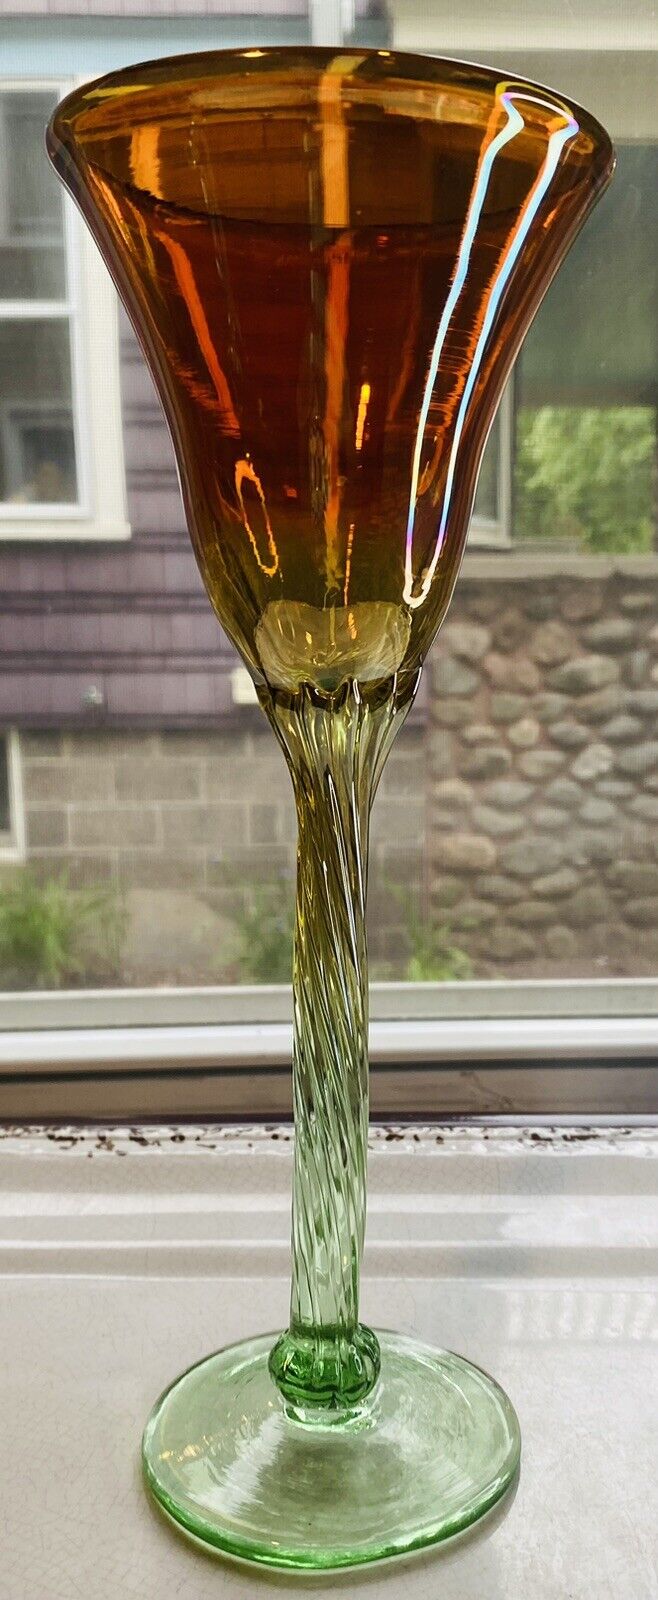 Rick Strini Iridescent Tulip Wine Glass Orange Green Twist Stem Signed Art Glass